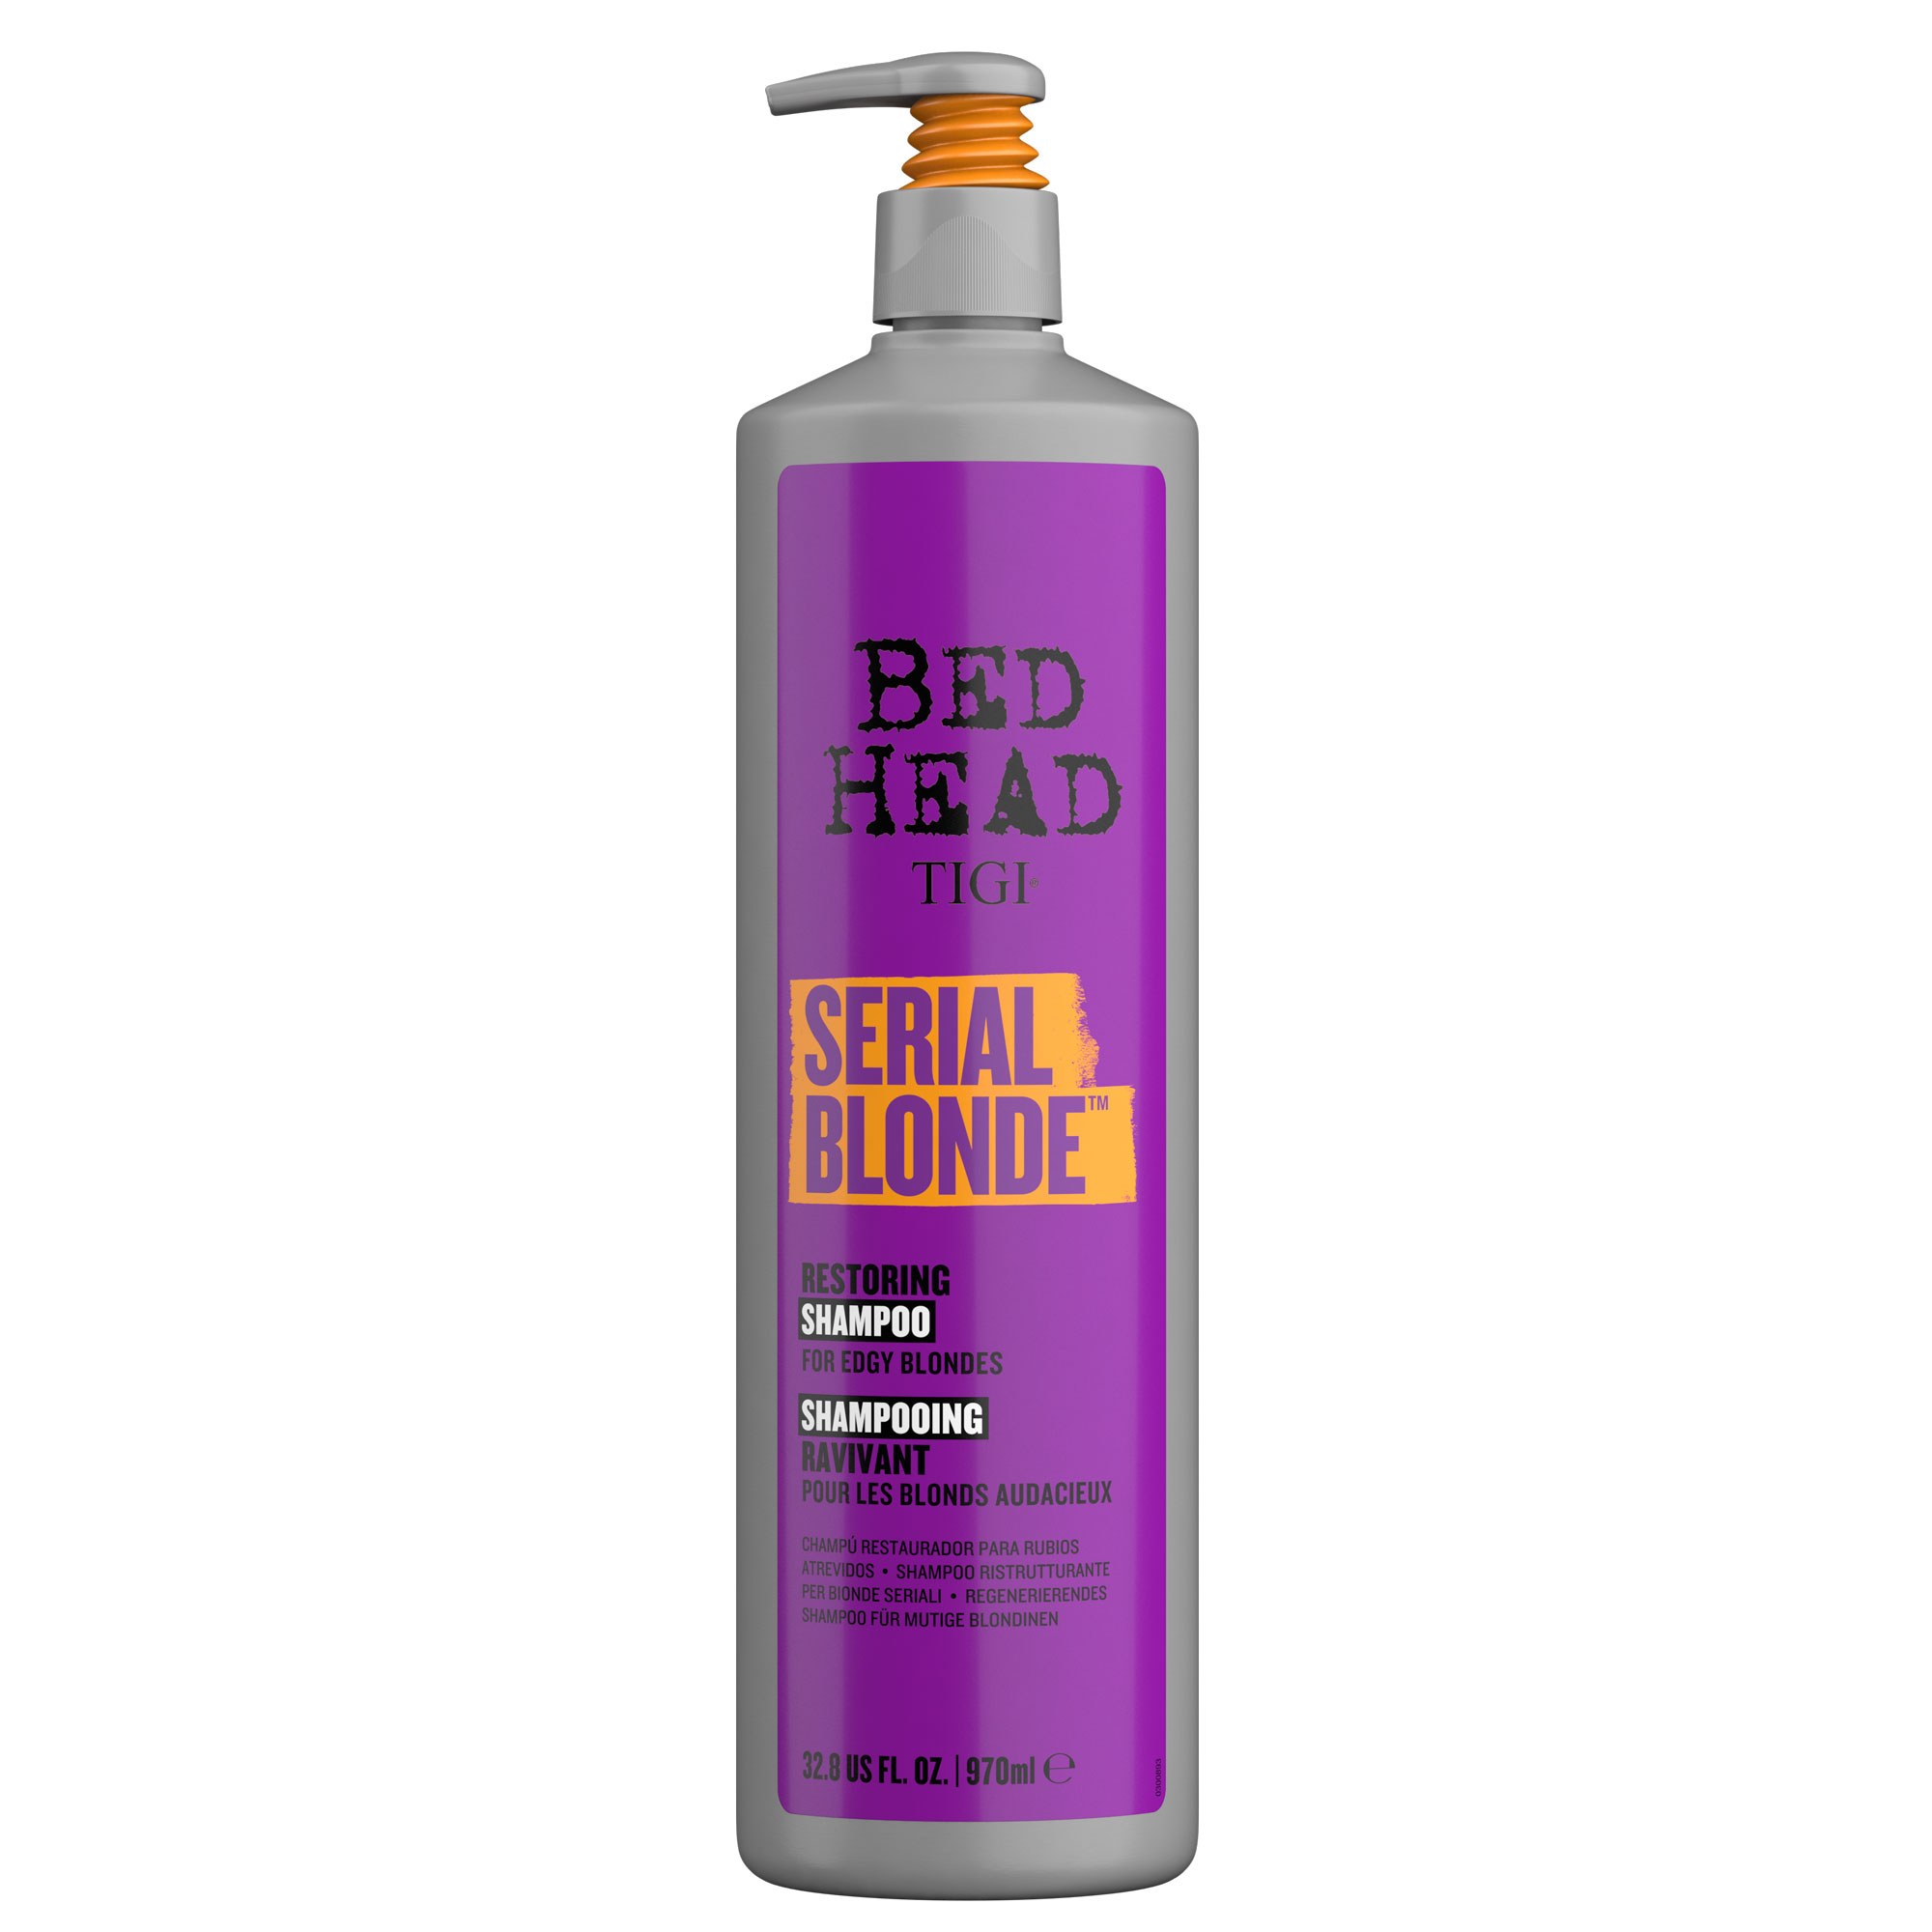 TIGI BEDHEAD: Serial Blonde Restoring Shampoo - New 2021 Liter Size